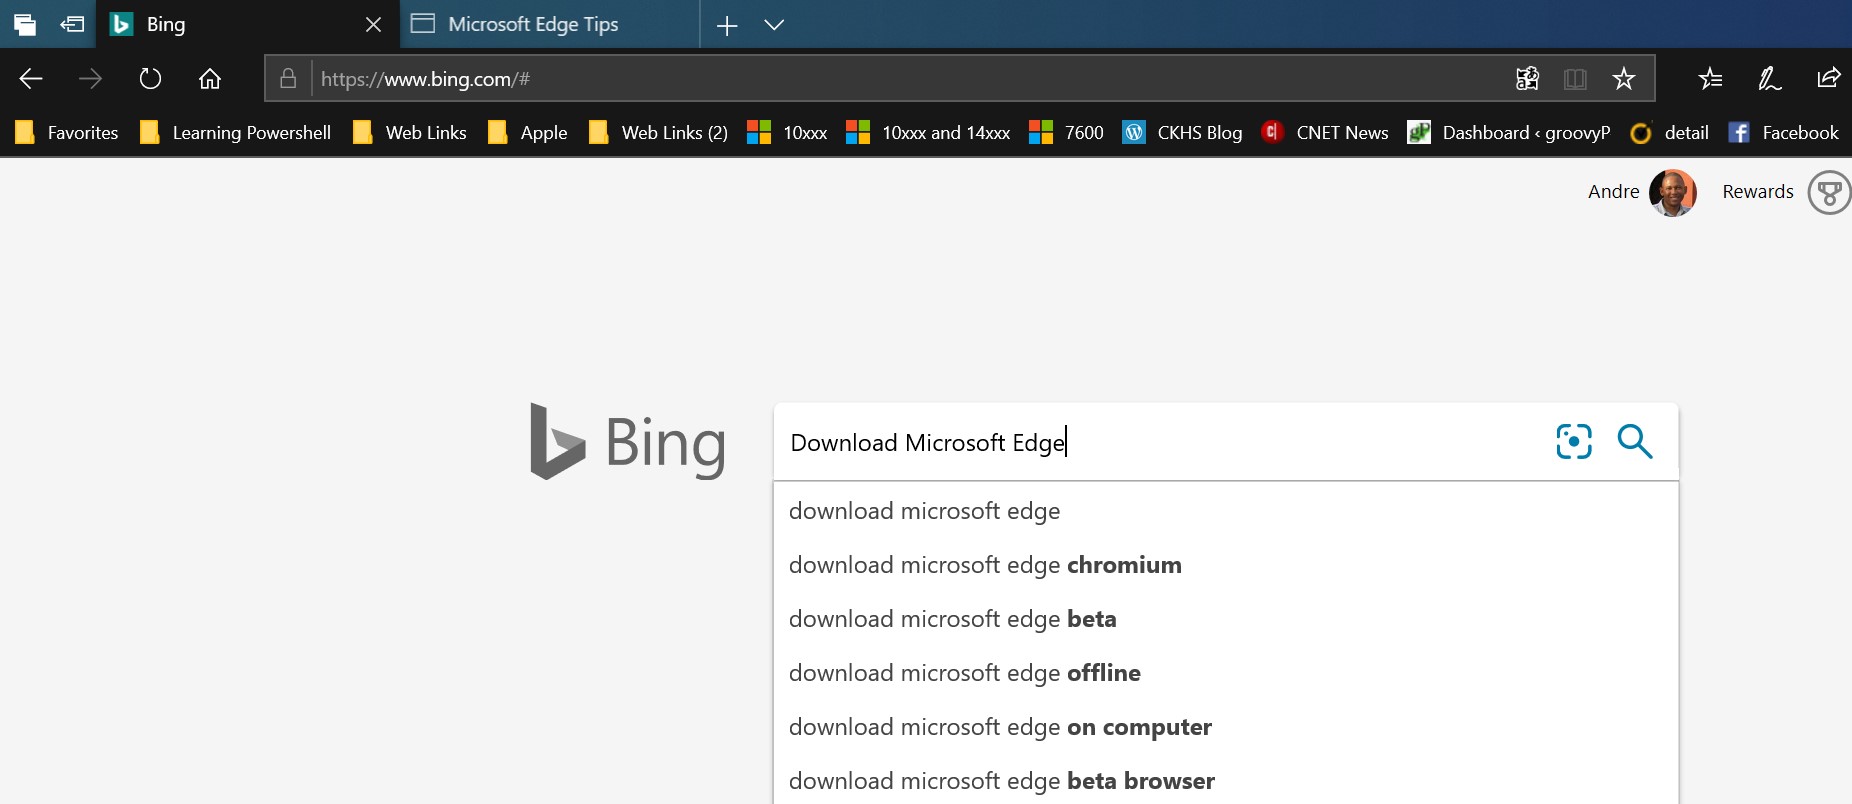 How To Install Microsoft Edge On Windows 10 Windows 8 Windows 7 Or Microsoft Community